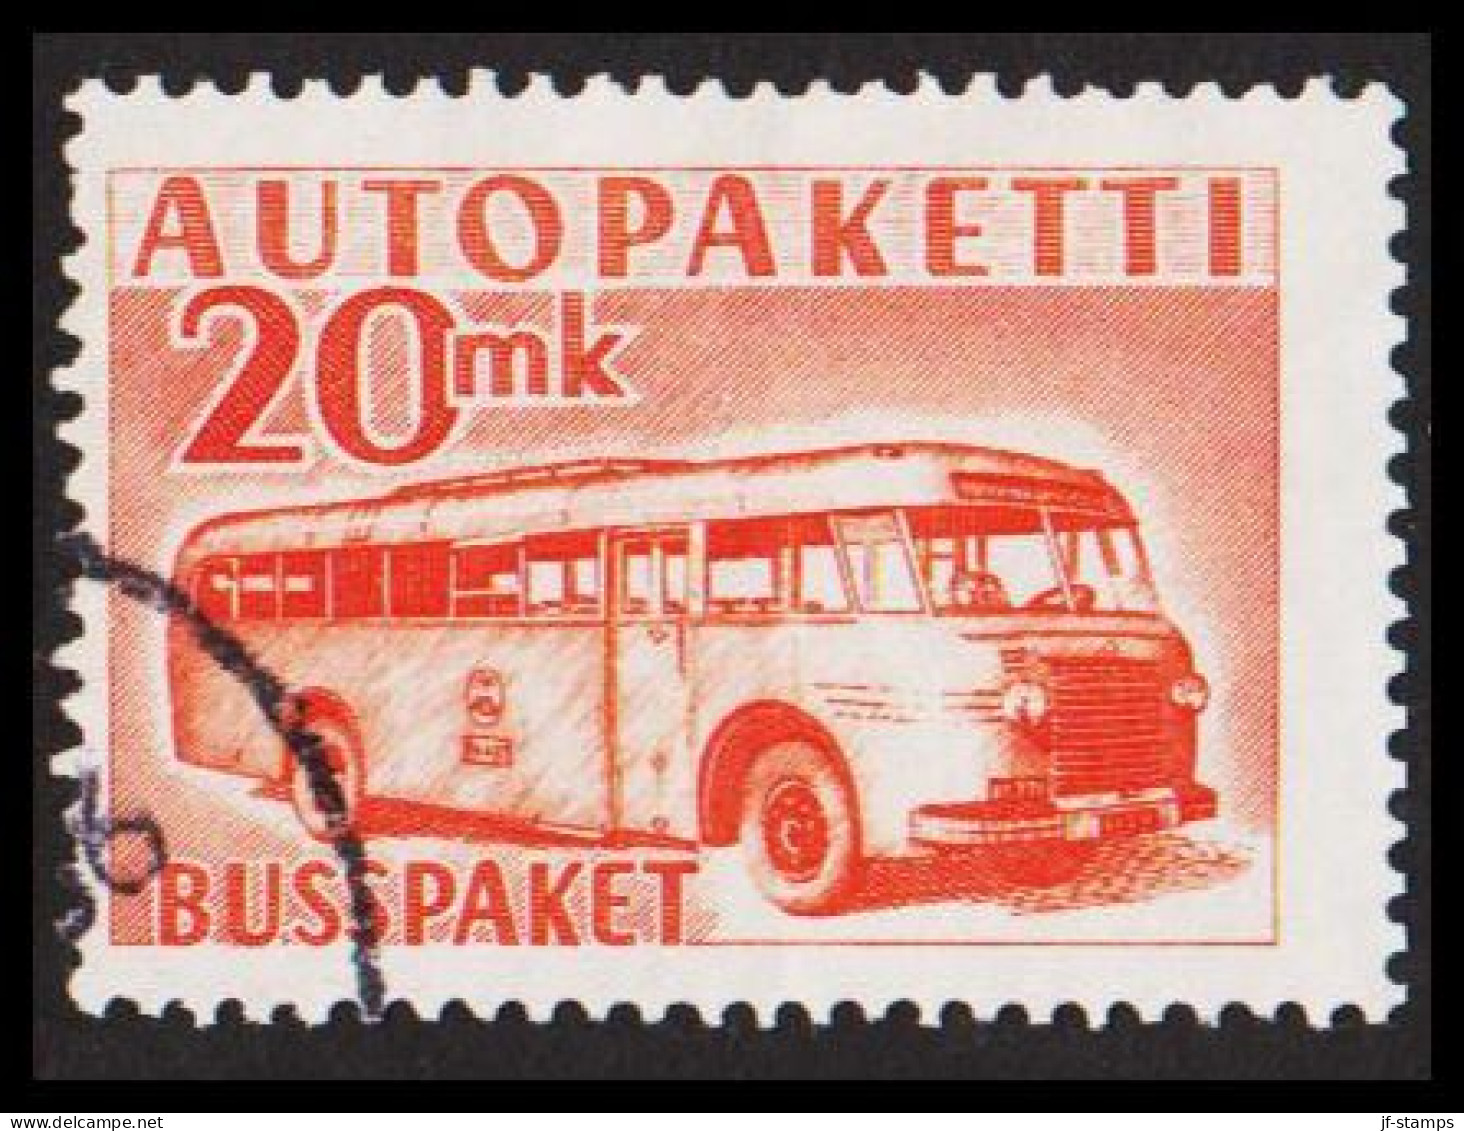 1952-1958. FINLAND. Mail Bus. 20 Mk. AUTOPAKETTI - BUSSPAKET  (Michel AP 7) - JF534381 - Colis Par Autobus